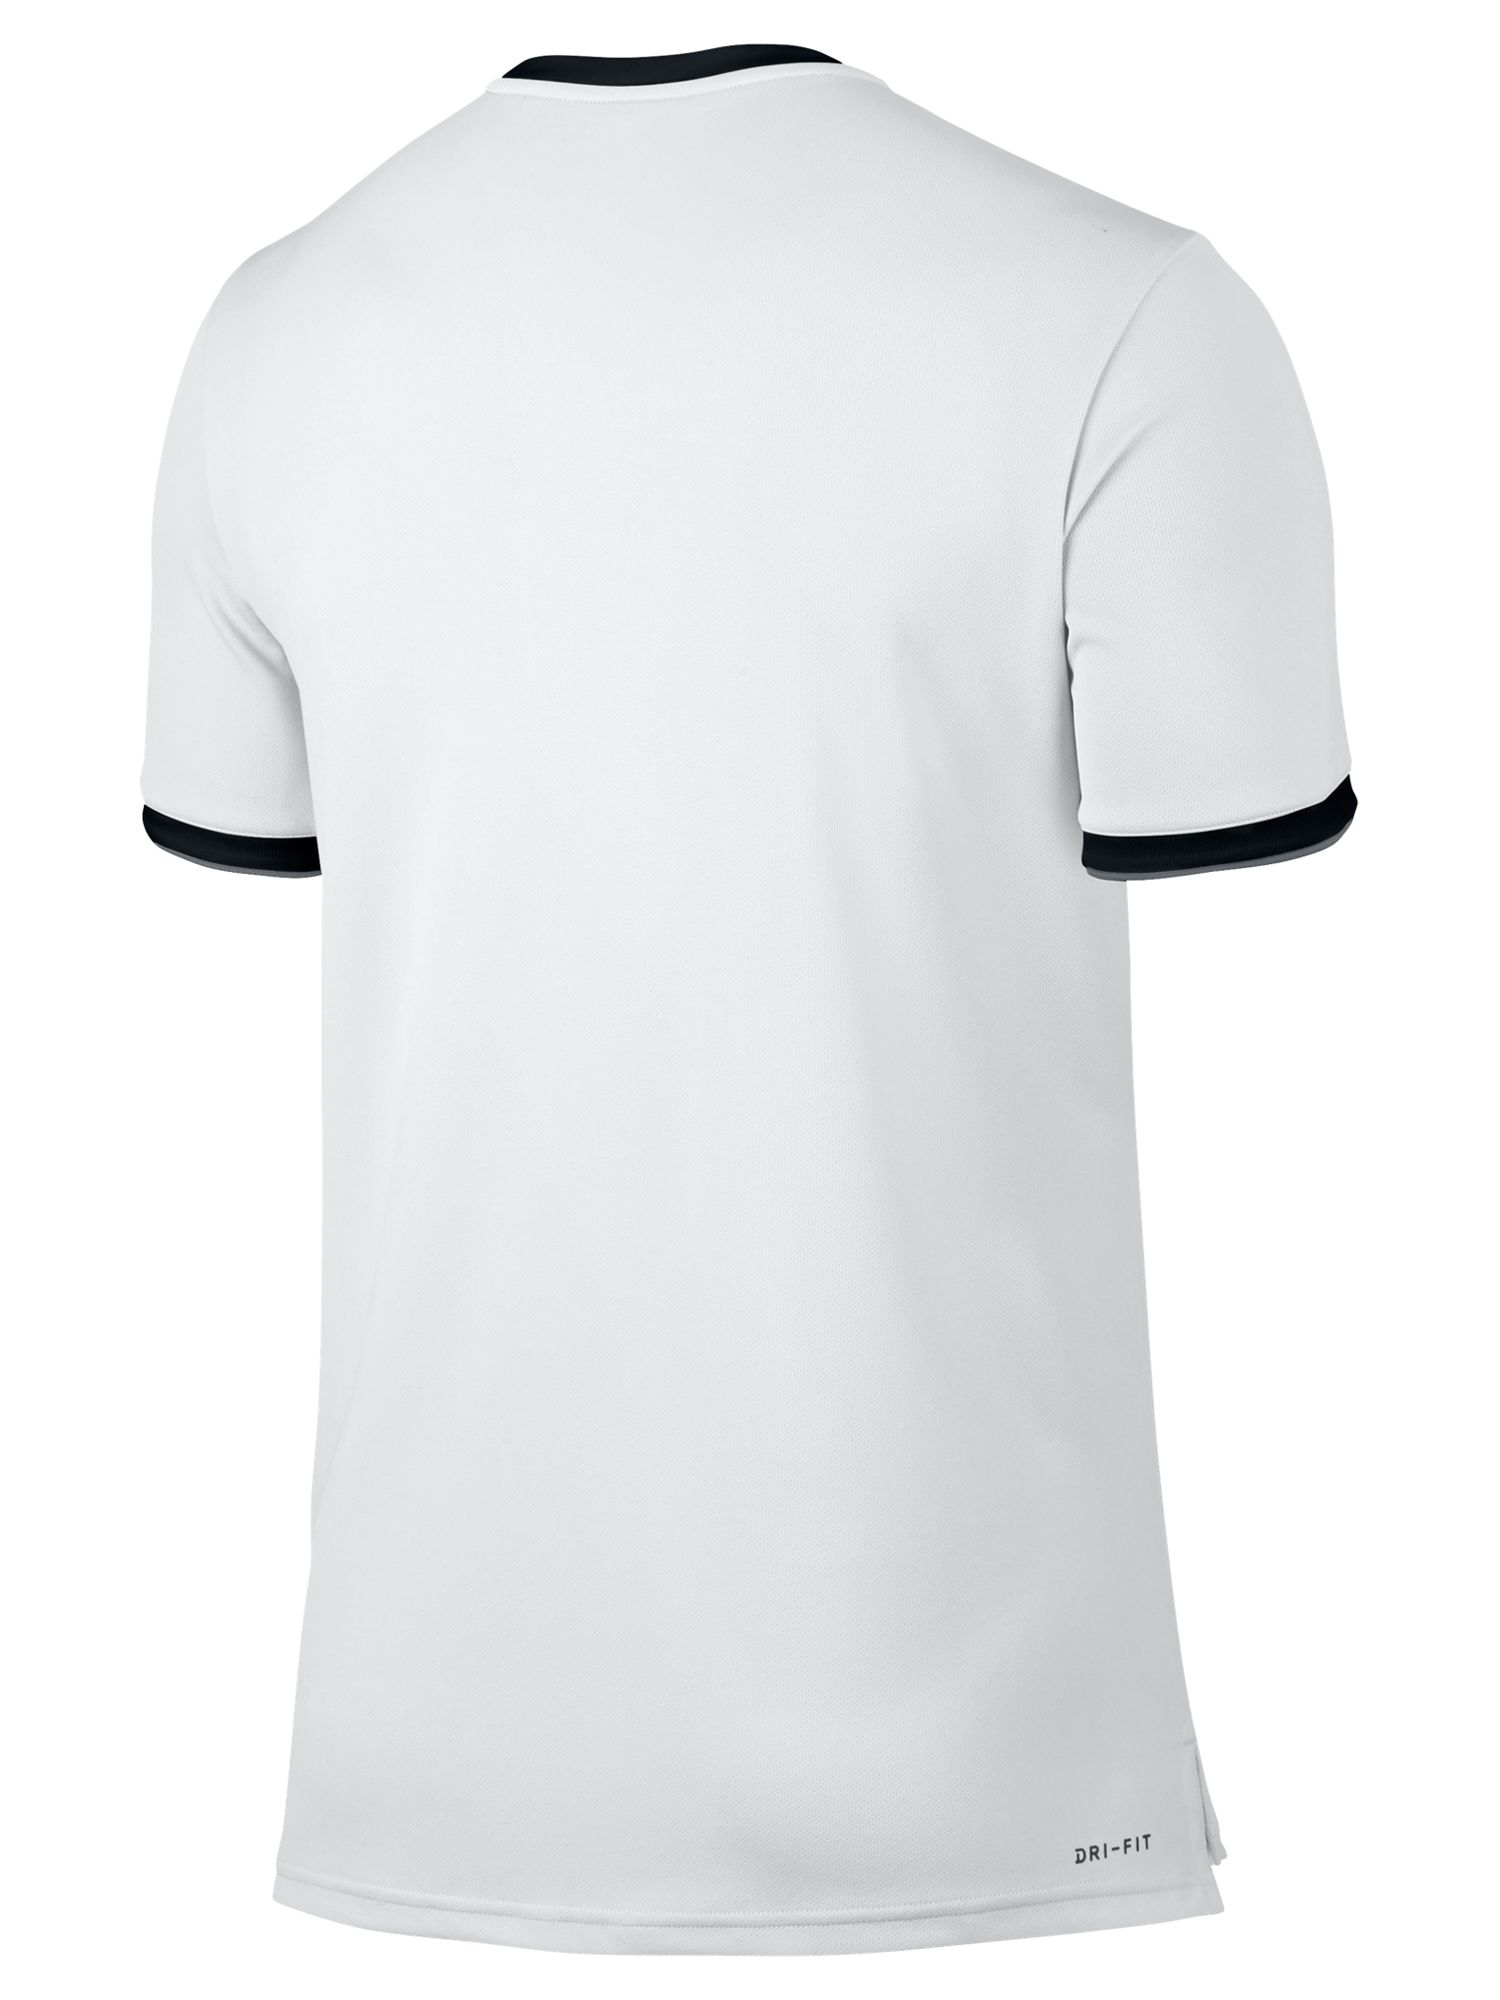 Nike NikeCourt Dry Tennis T-Shirt, White/Black